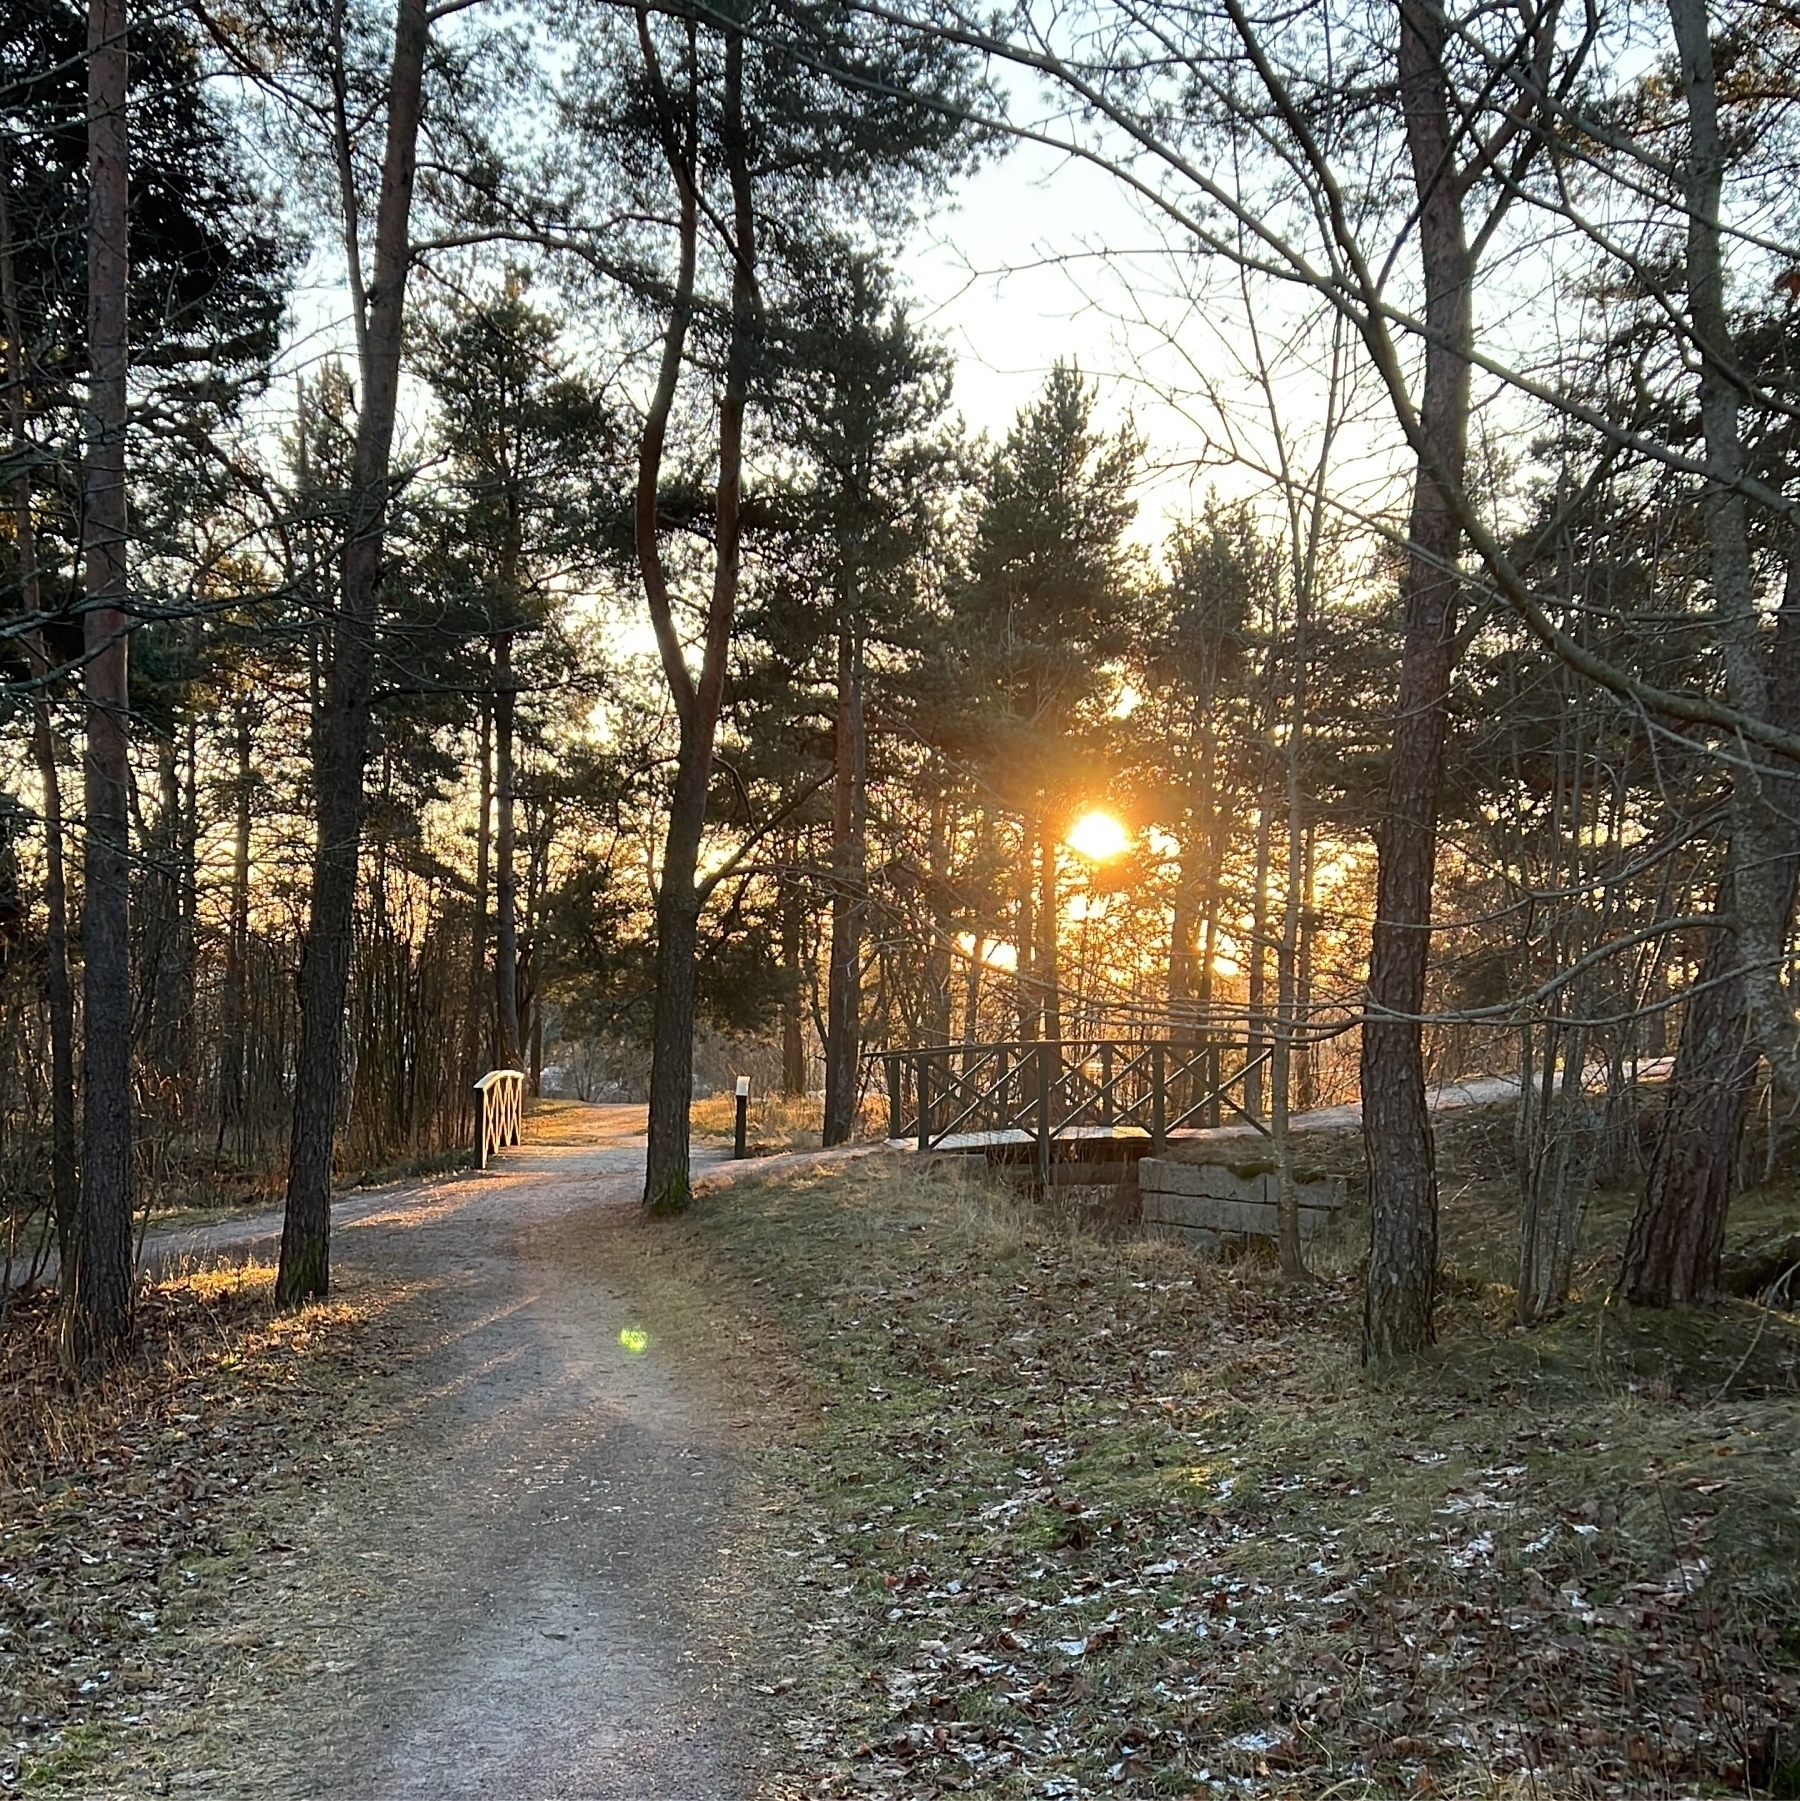 frozen ground, a pathway, pine trees